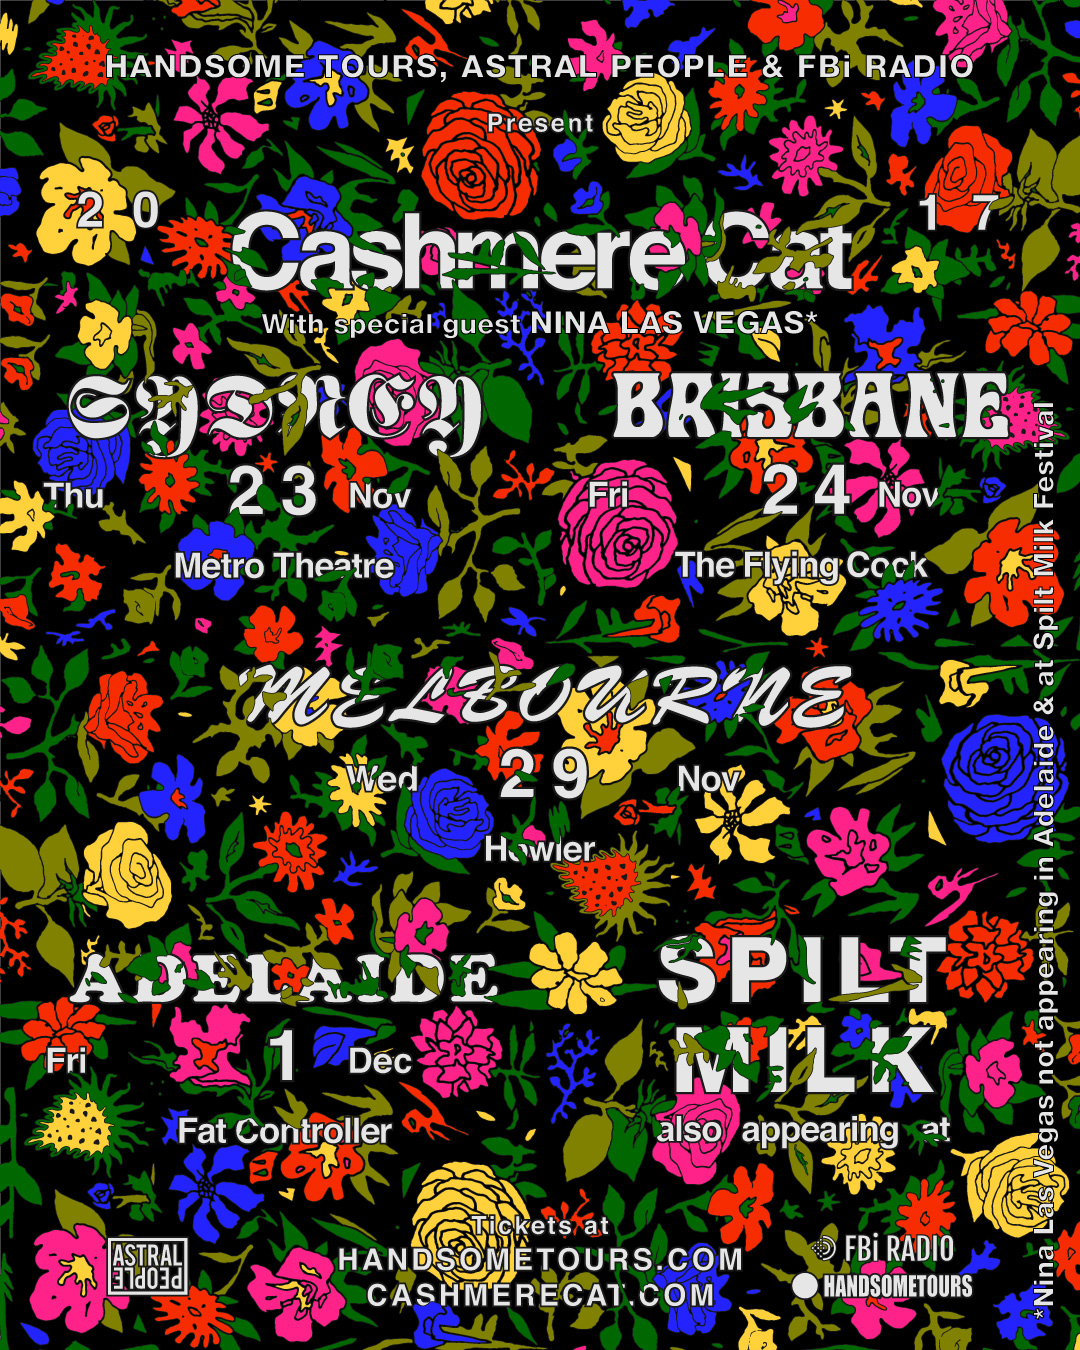 https://handsometours.com/wp-content/uploads/2017/08/Cashmere_Cat_All_Dates-2.jpg